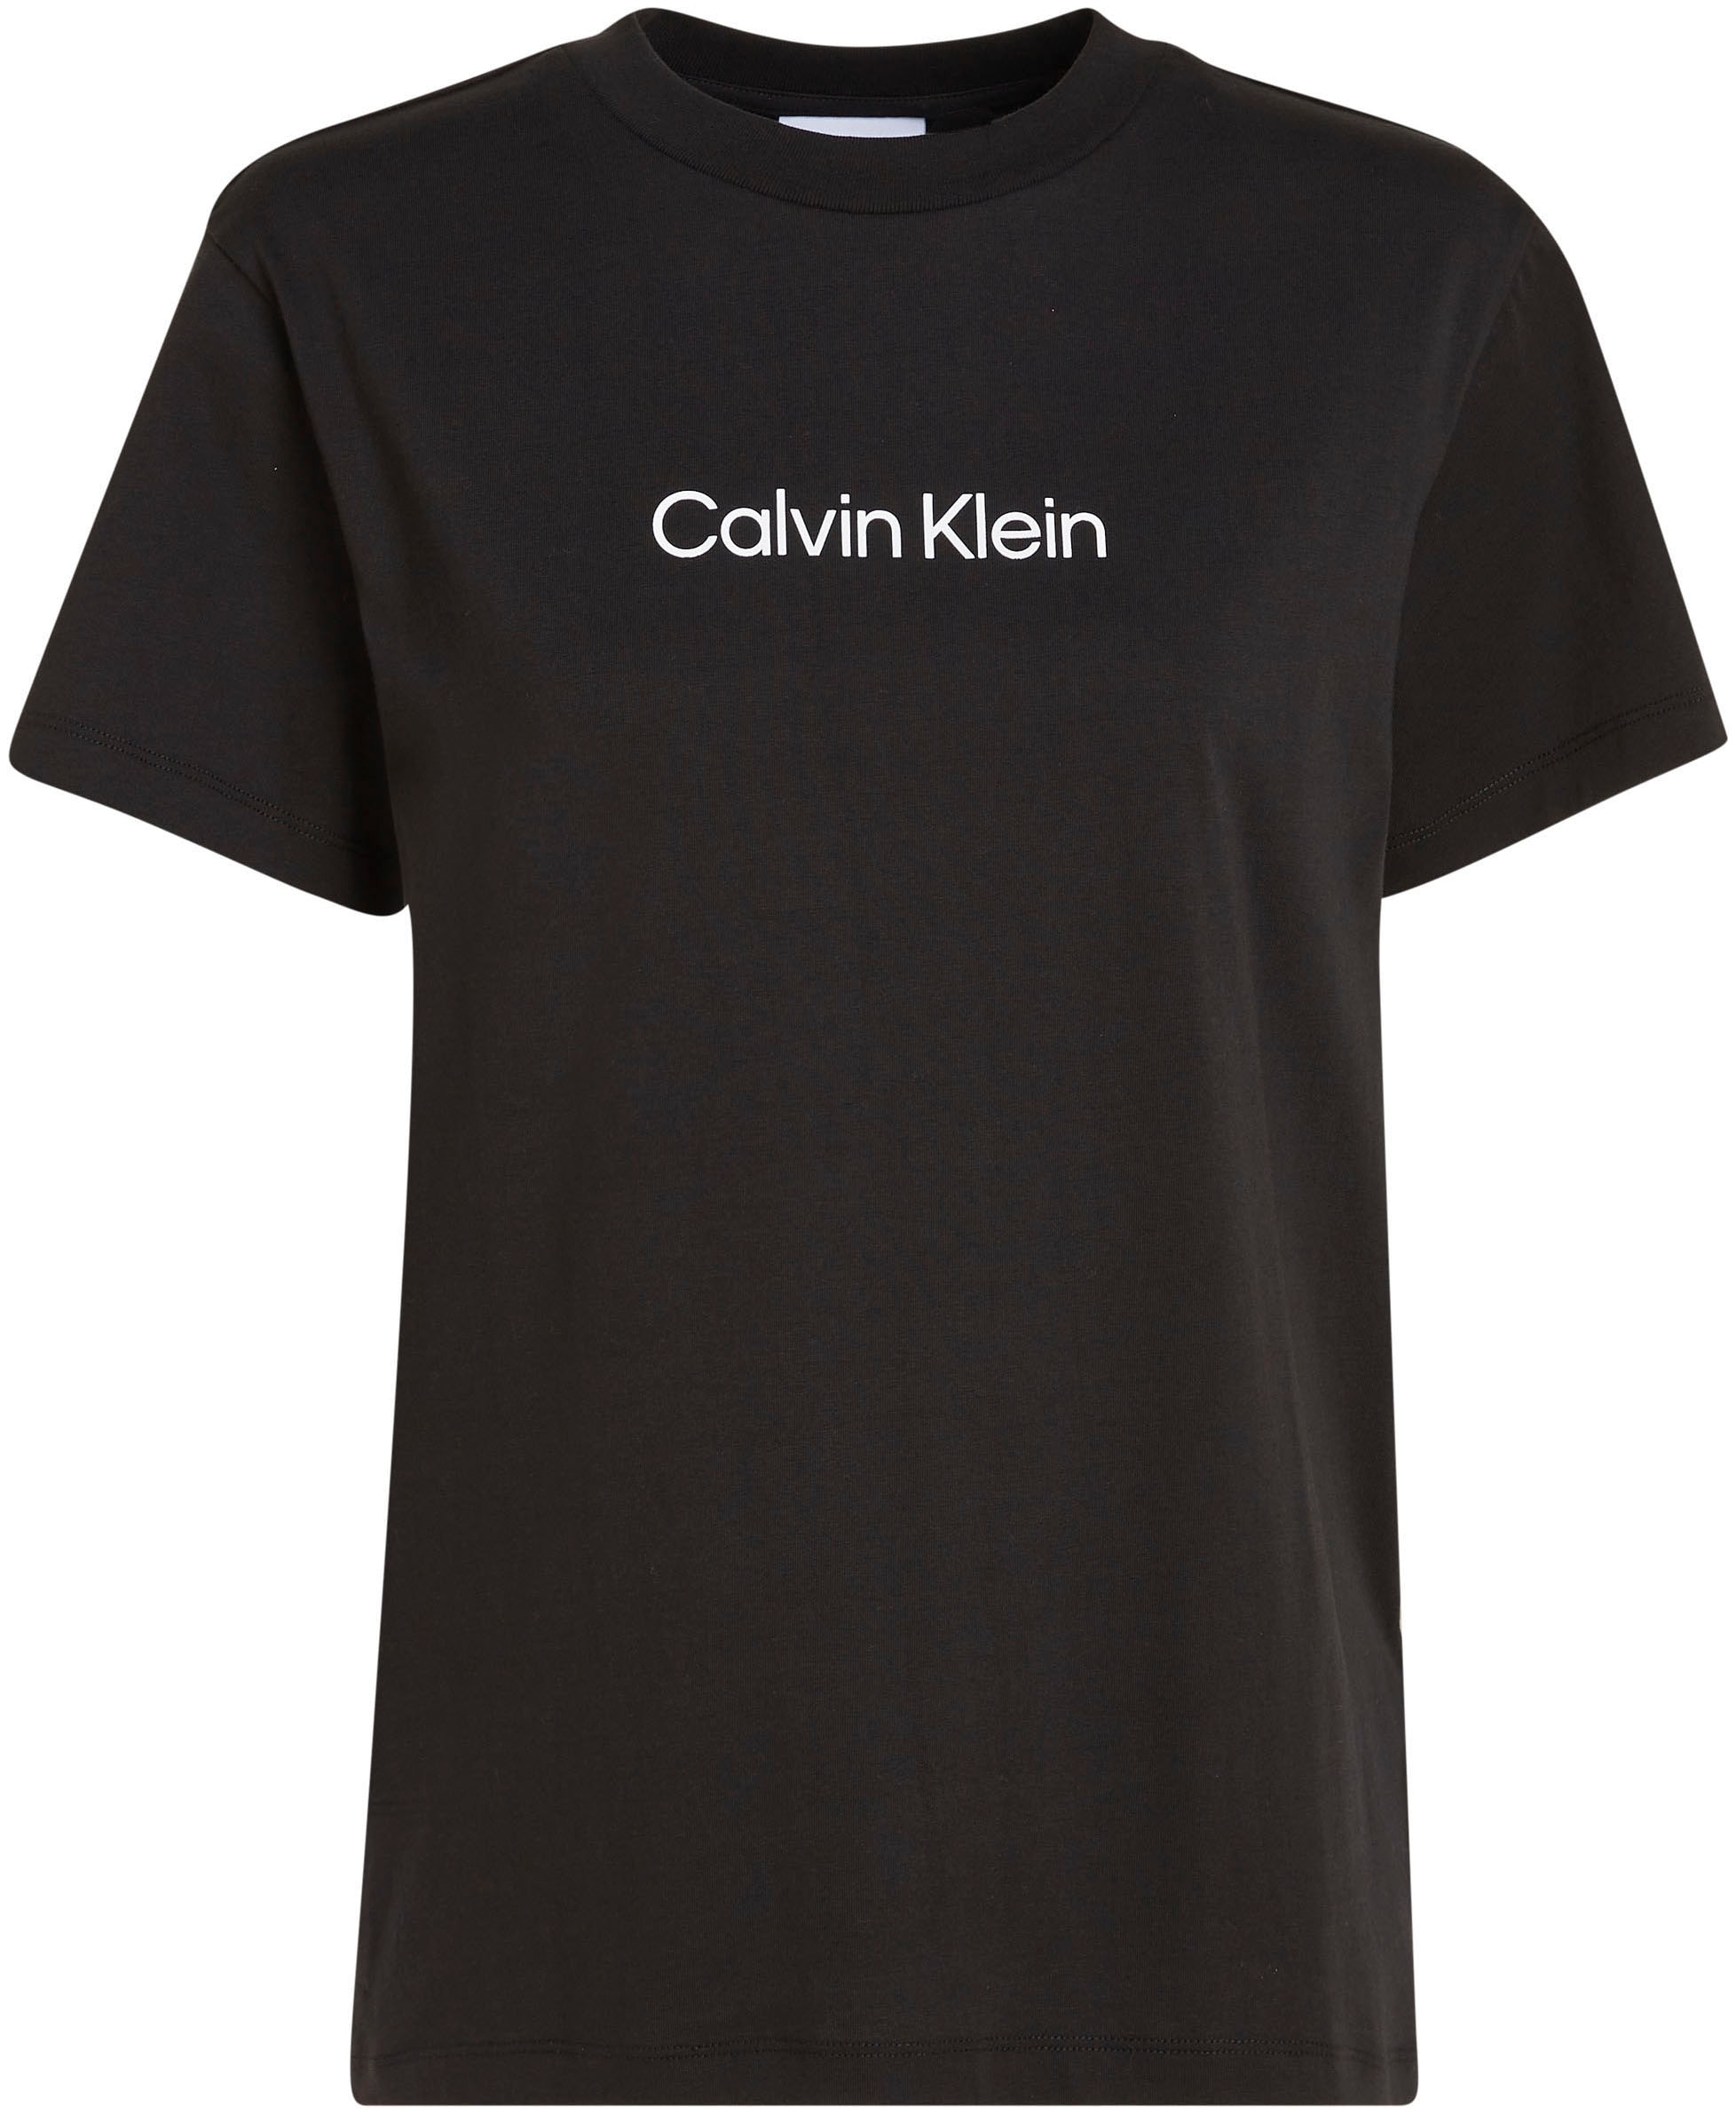 REGULAR« kaufen »Shirt OTTO LOGO Calvin T-Shirt Klein HERO bei